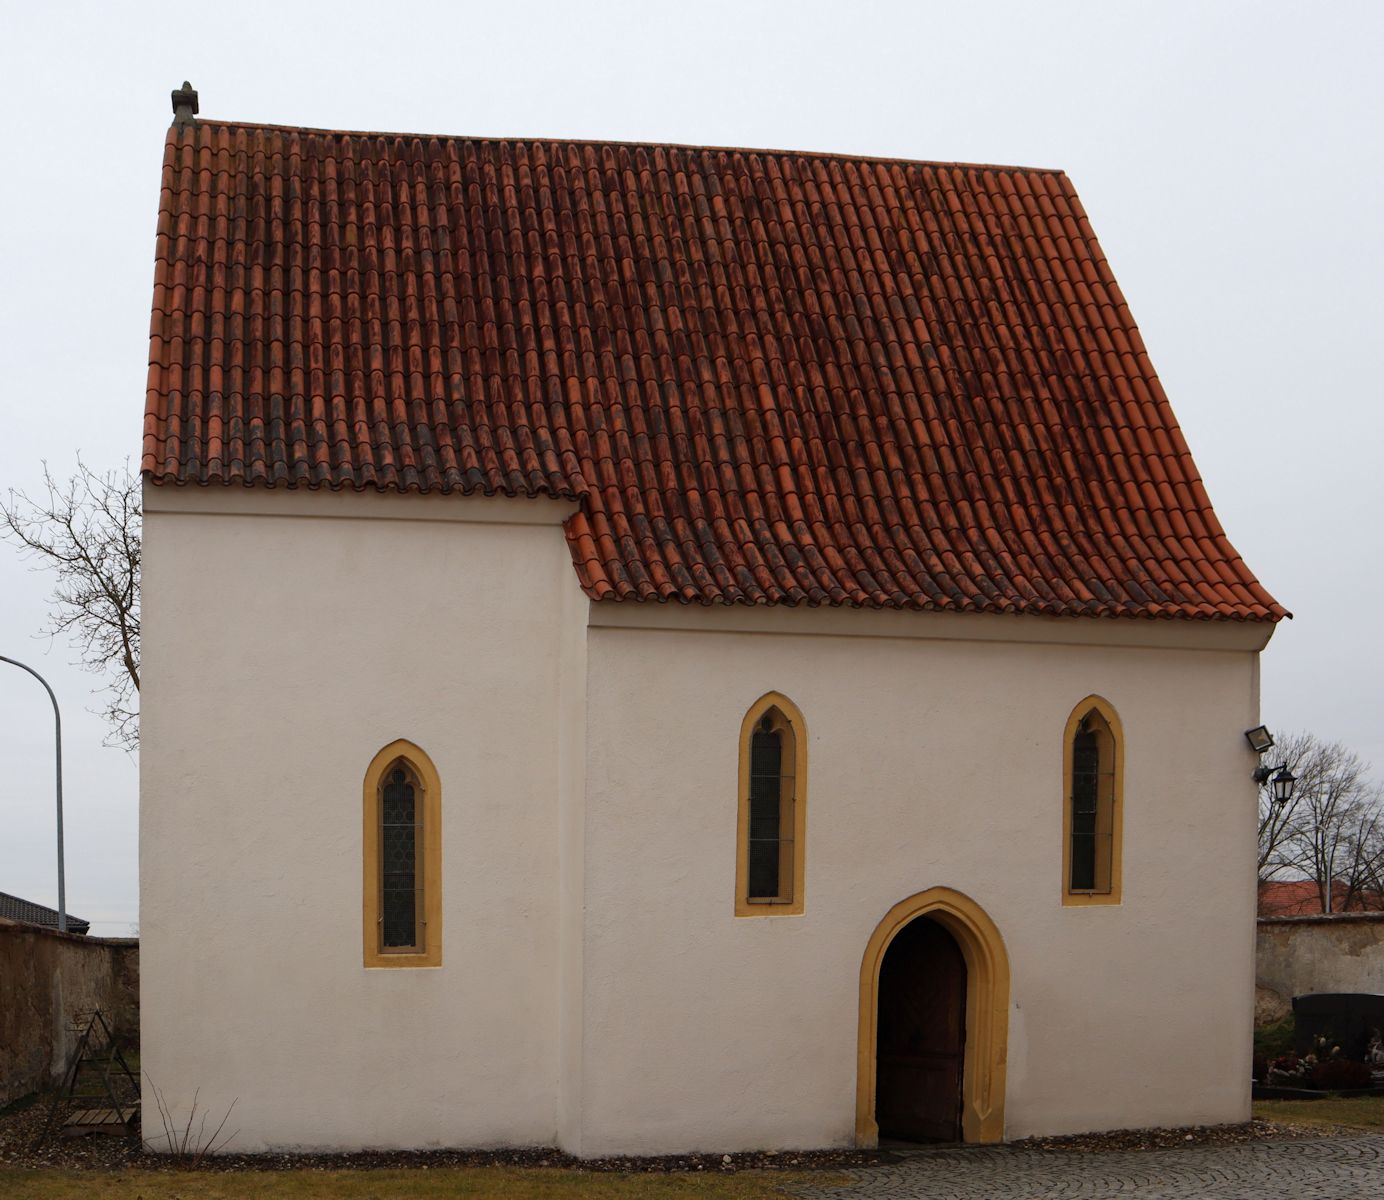 ehemalige Schlosskapelle neben der heutigen Pfarrkirche in Geisling